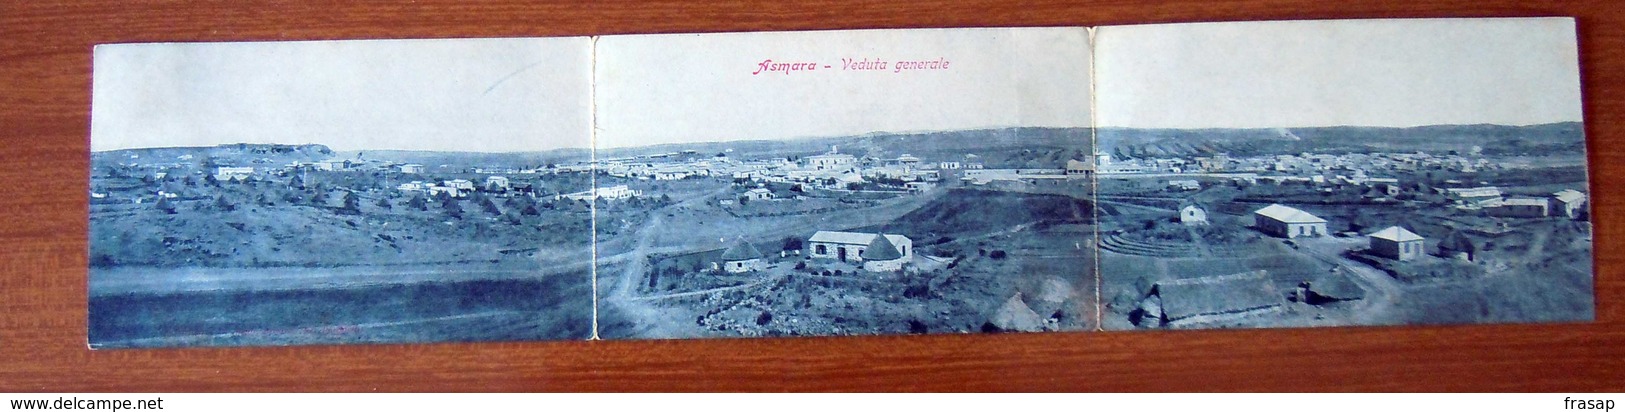 Erytrée Eritrea Colonie Italienne Cpa -PANORAMA ASMARA TRIPLE TRES RARE 1908 - Erythrée